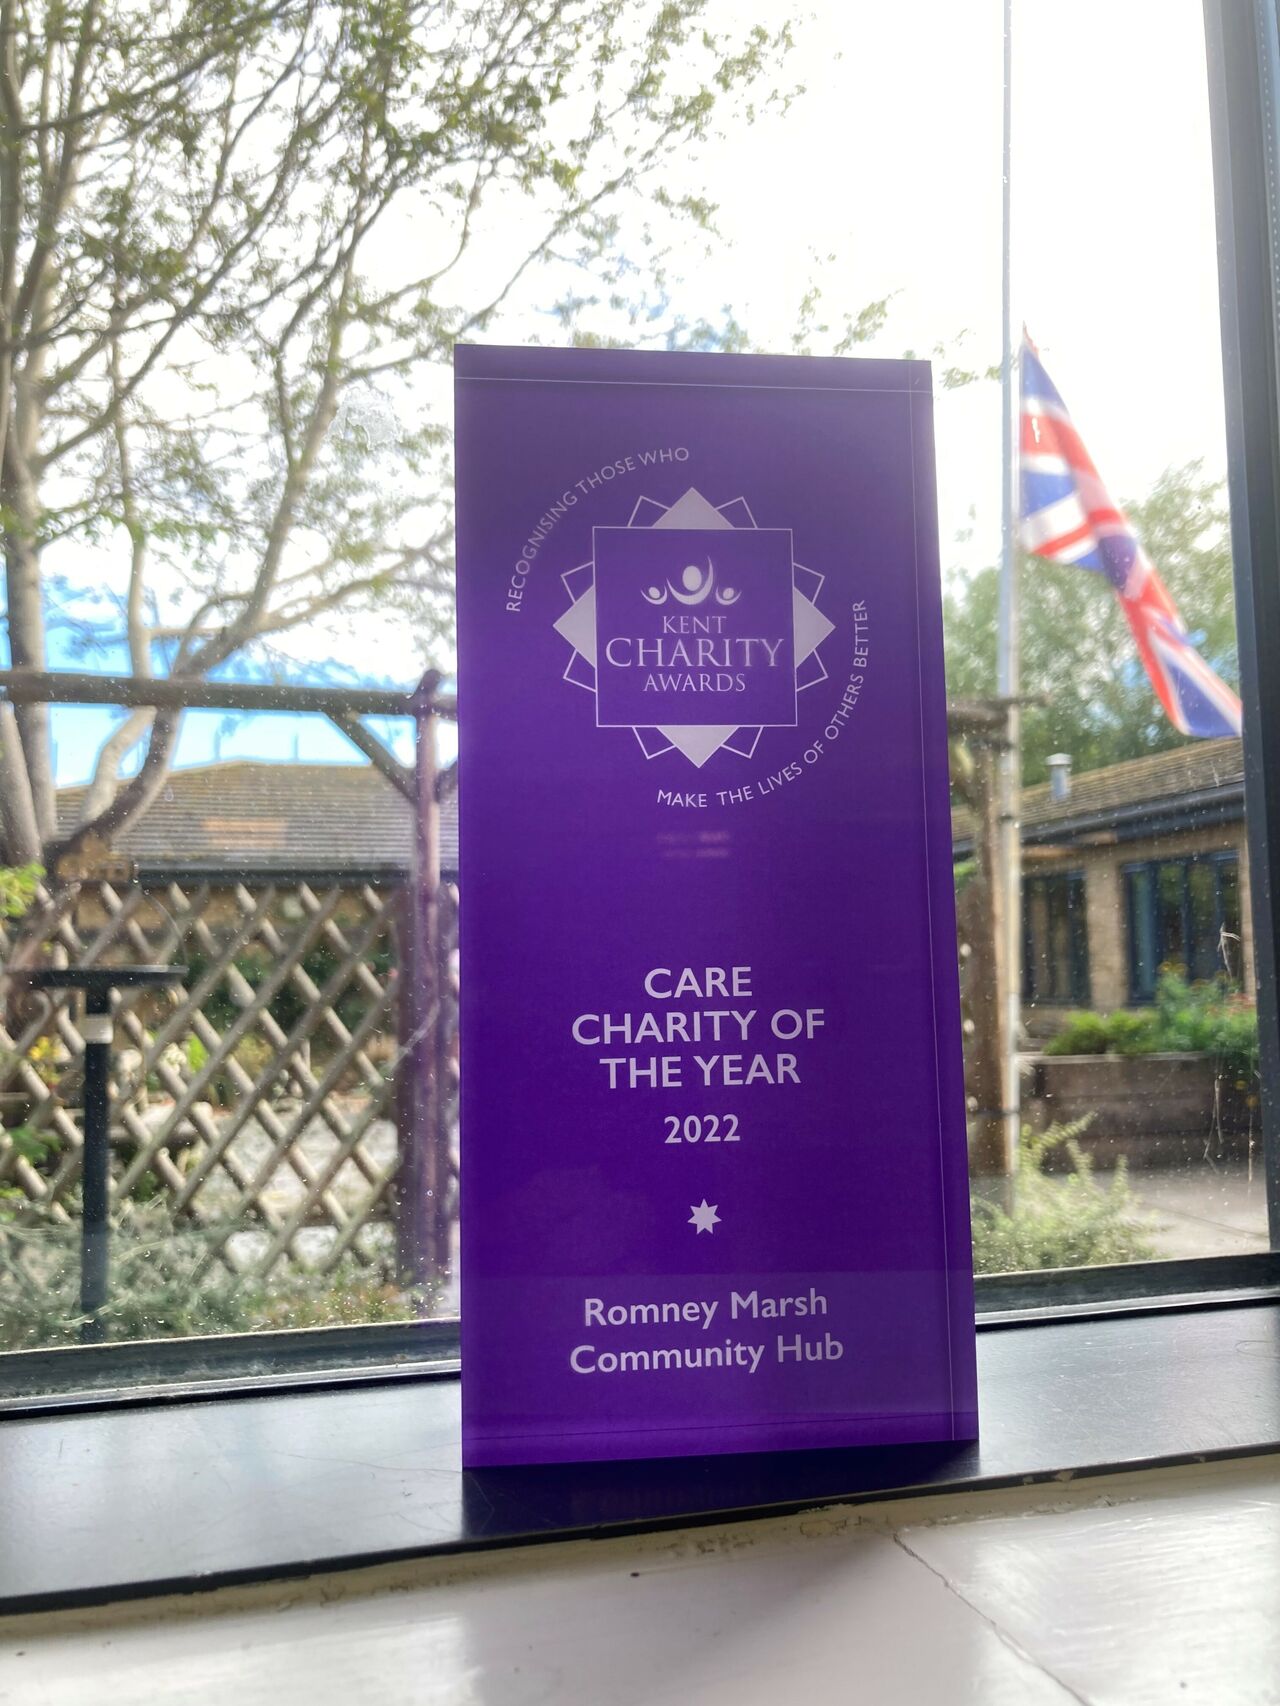 The Romney Marsh Community Hub Charity of the Year